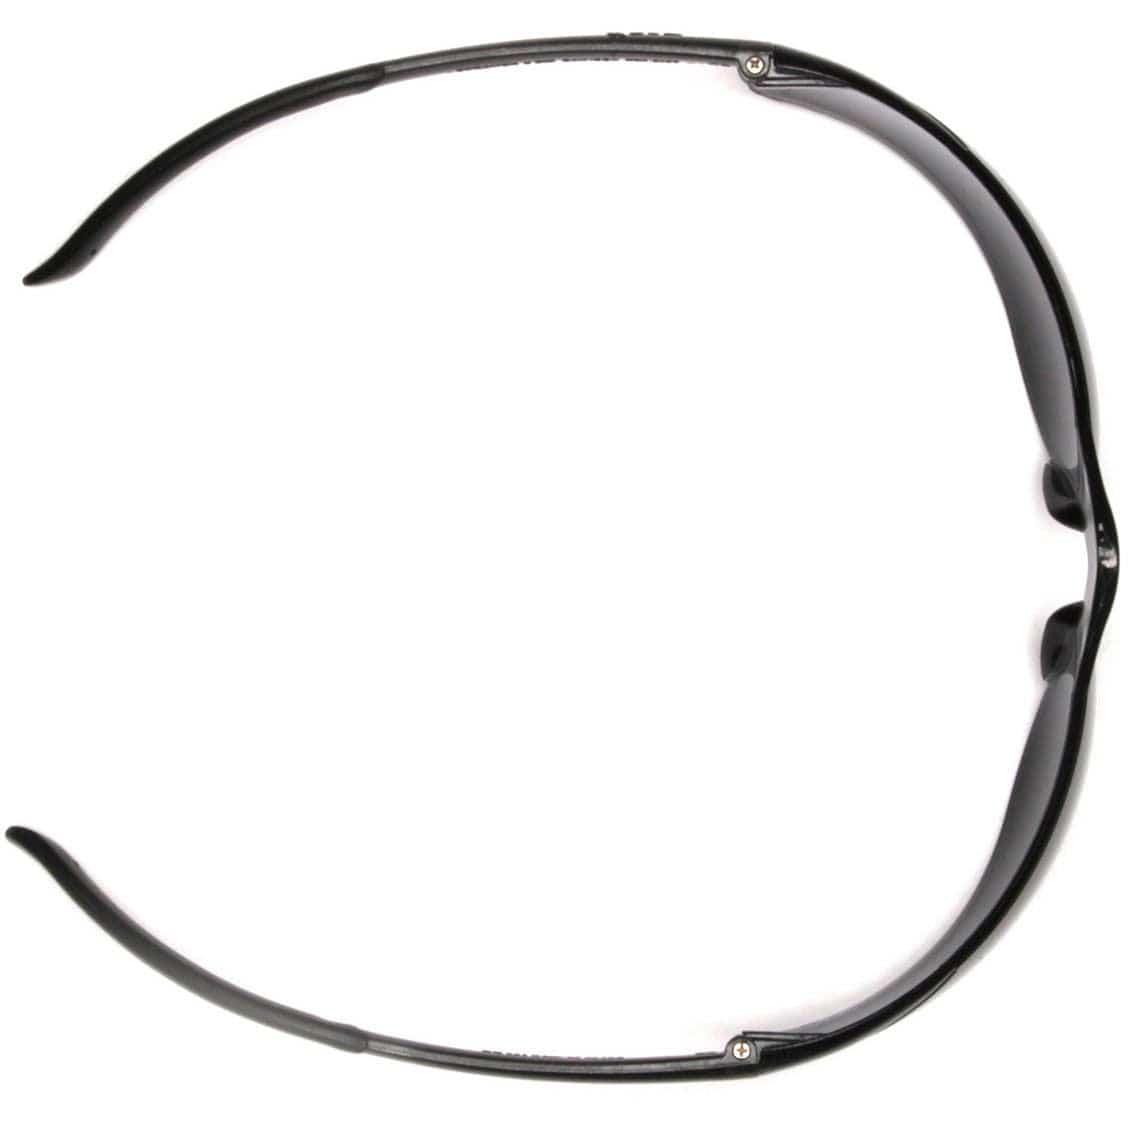 Pyramex S2520S Ztek Safety Glasses Top View